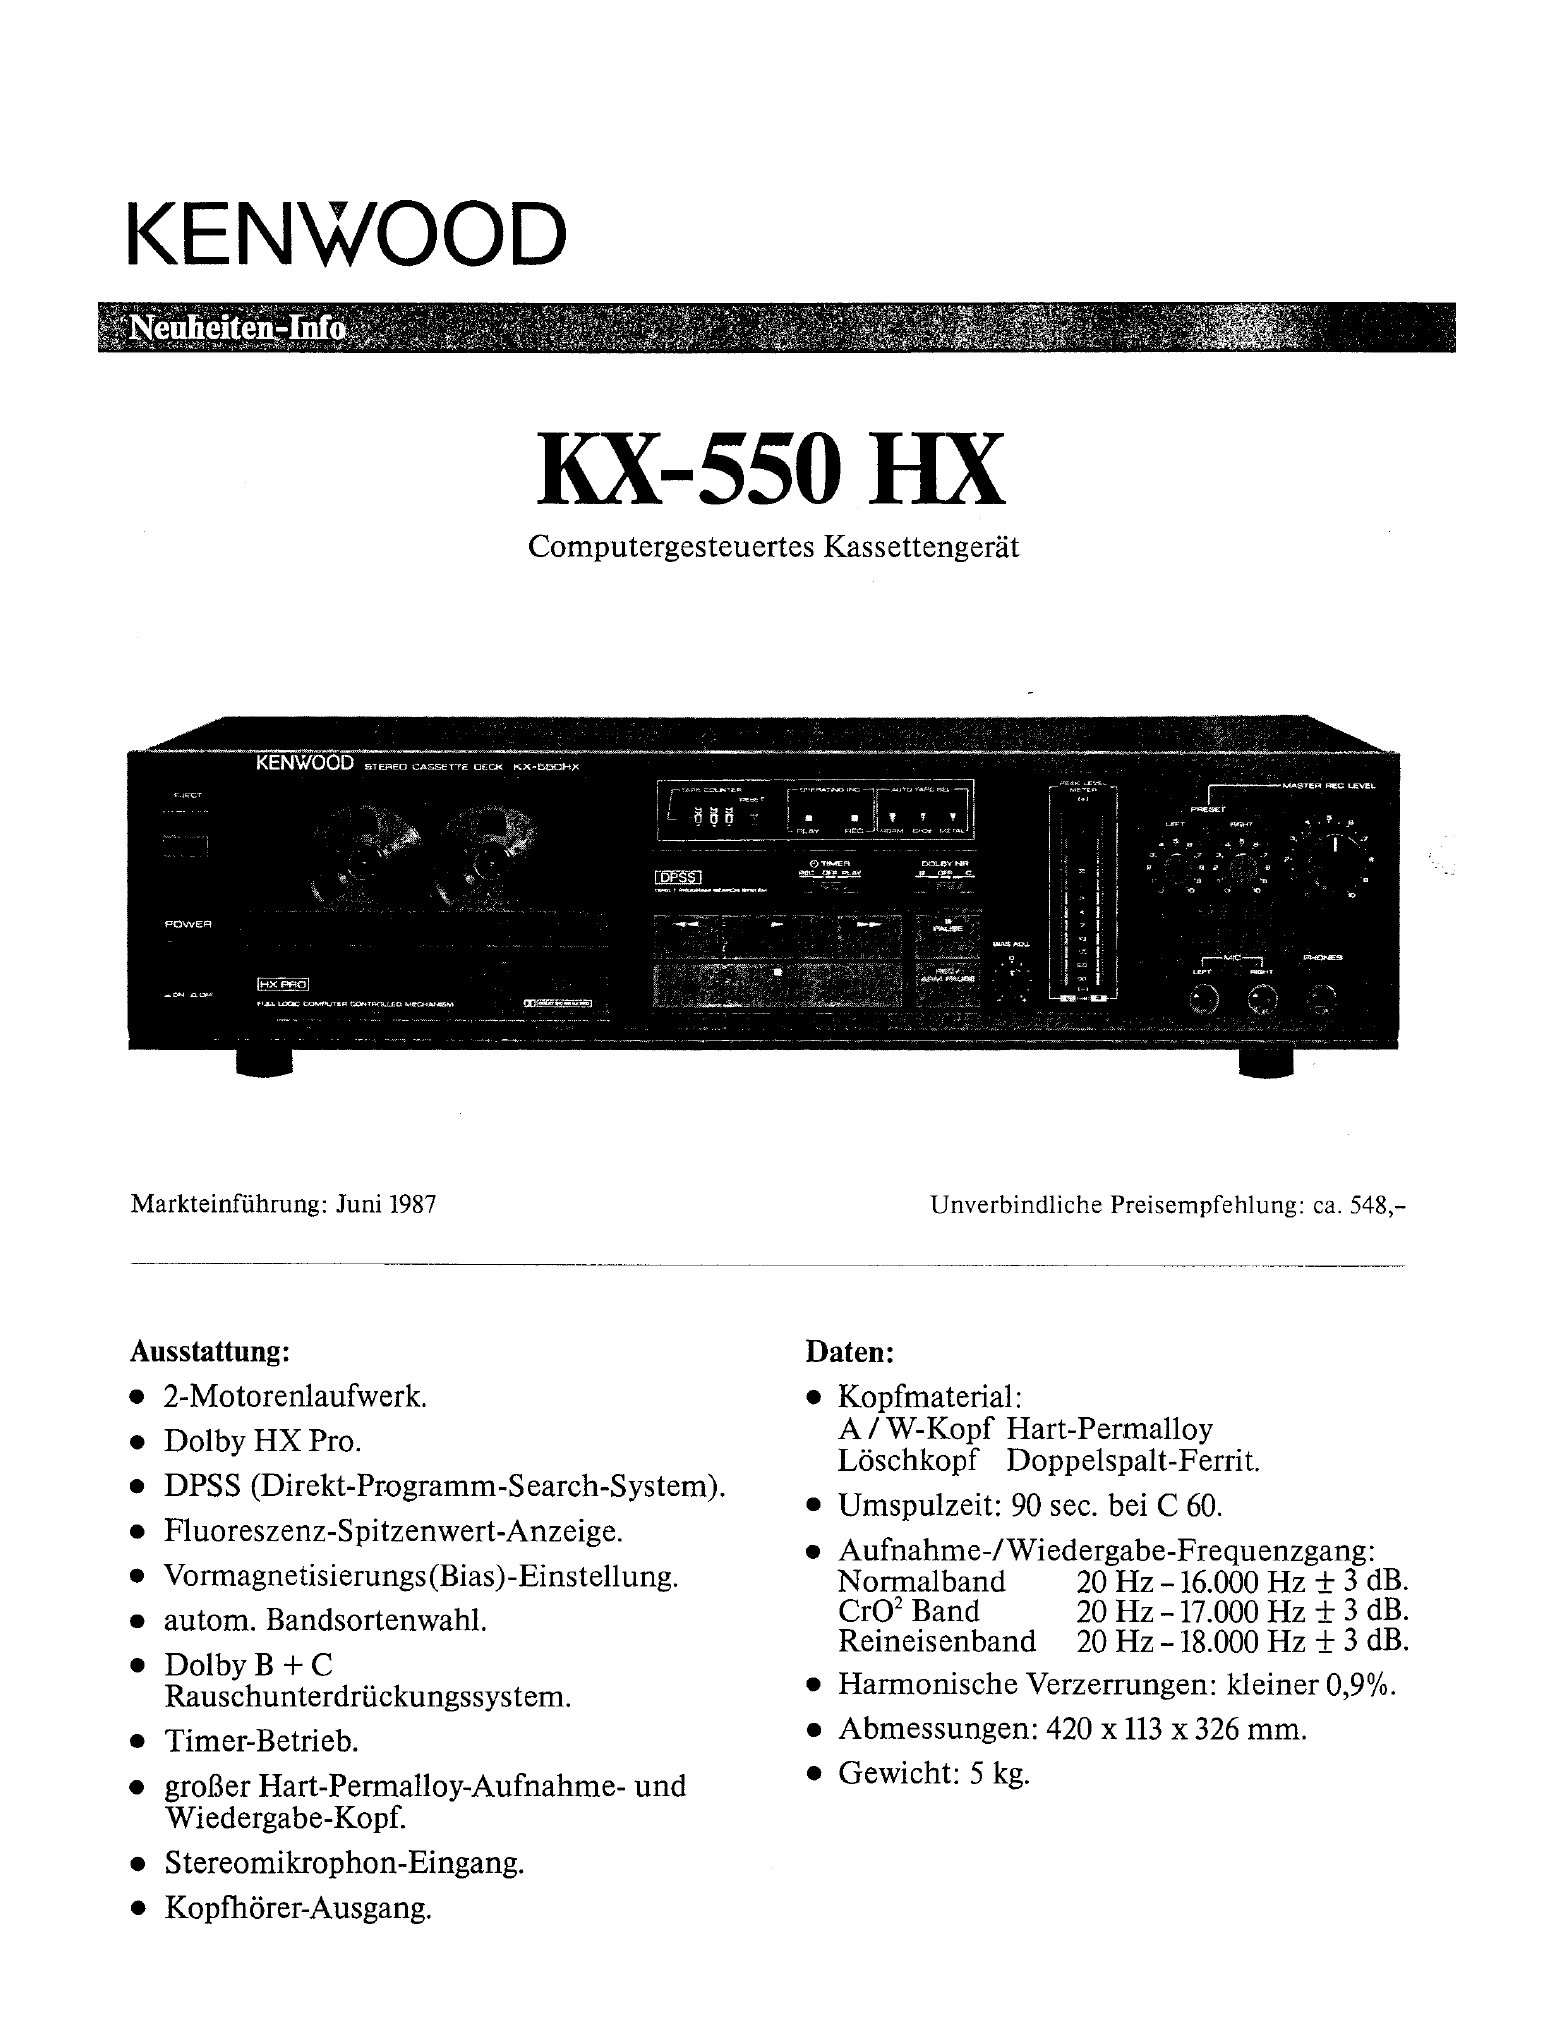 Kenwood KX-550 HX-Prospekt-1987.jpg